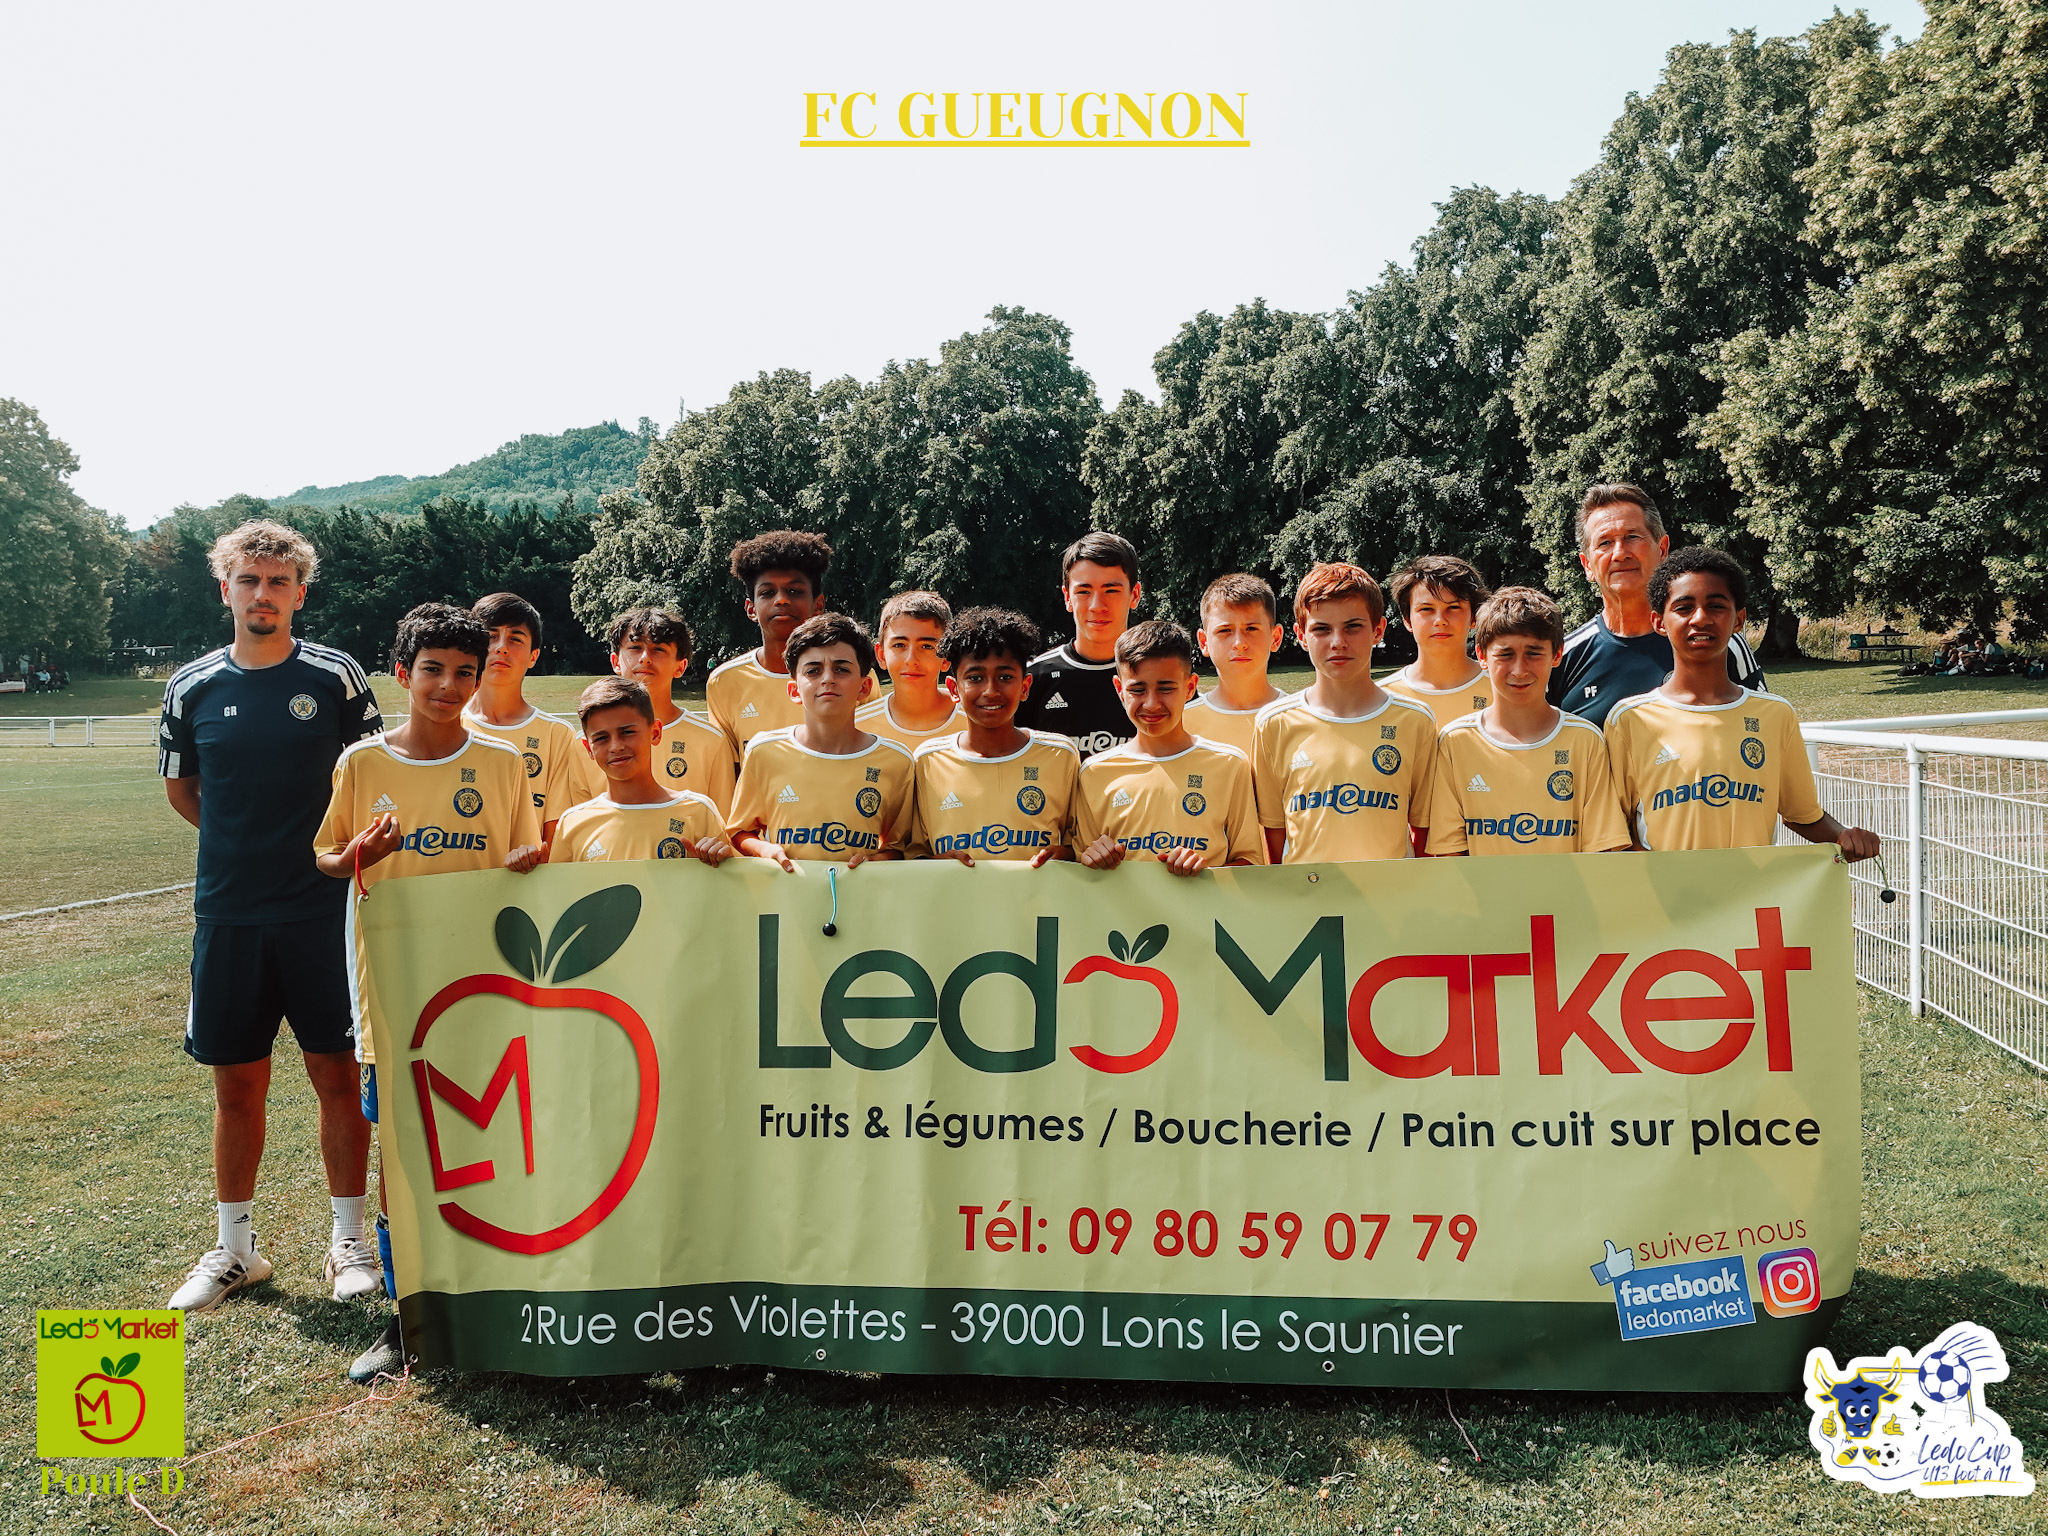 Ledocup FC Gueugnon